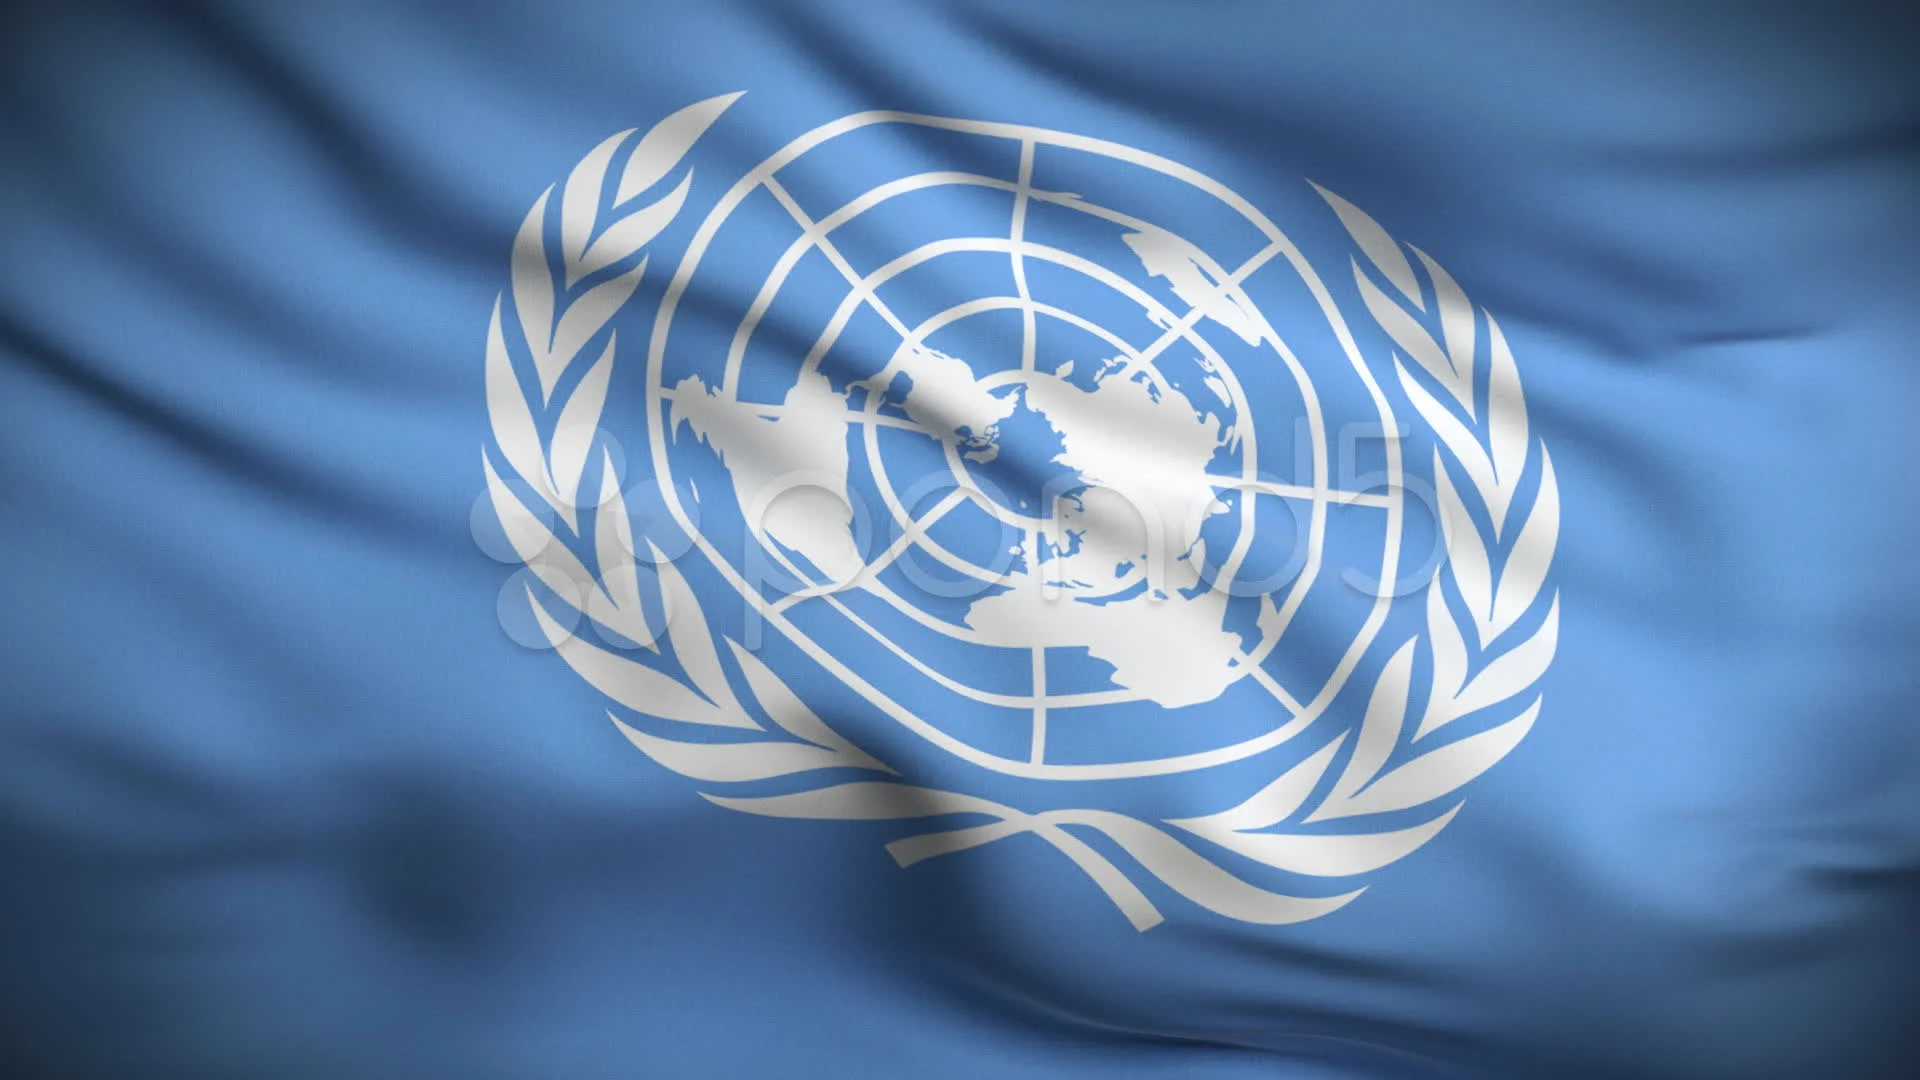 Стандартные правила оон. Флаг ООН. Международные организации ООН. Флаг ООН 1995. Совет безопасности ООН логотип.